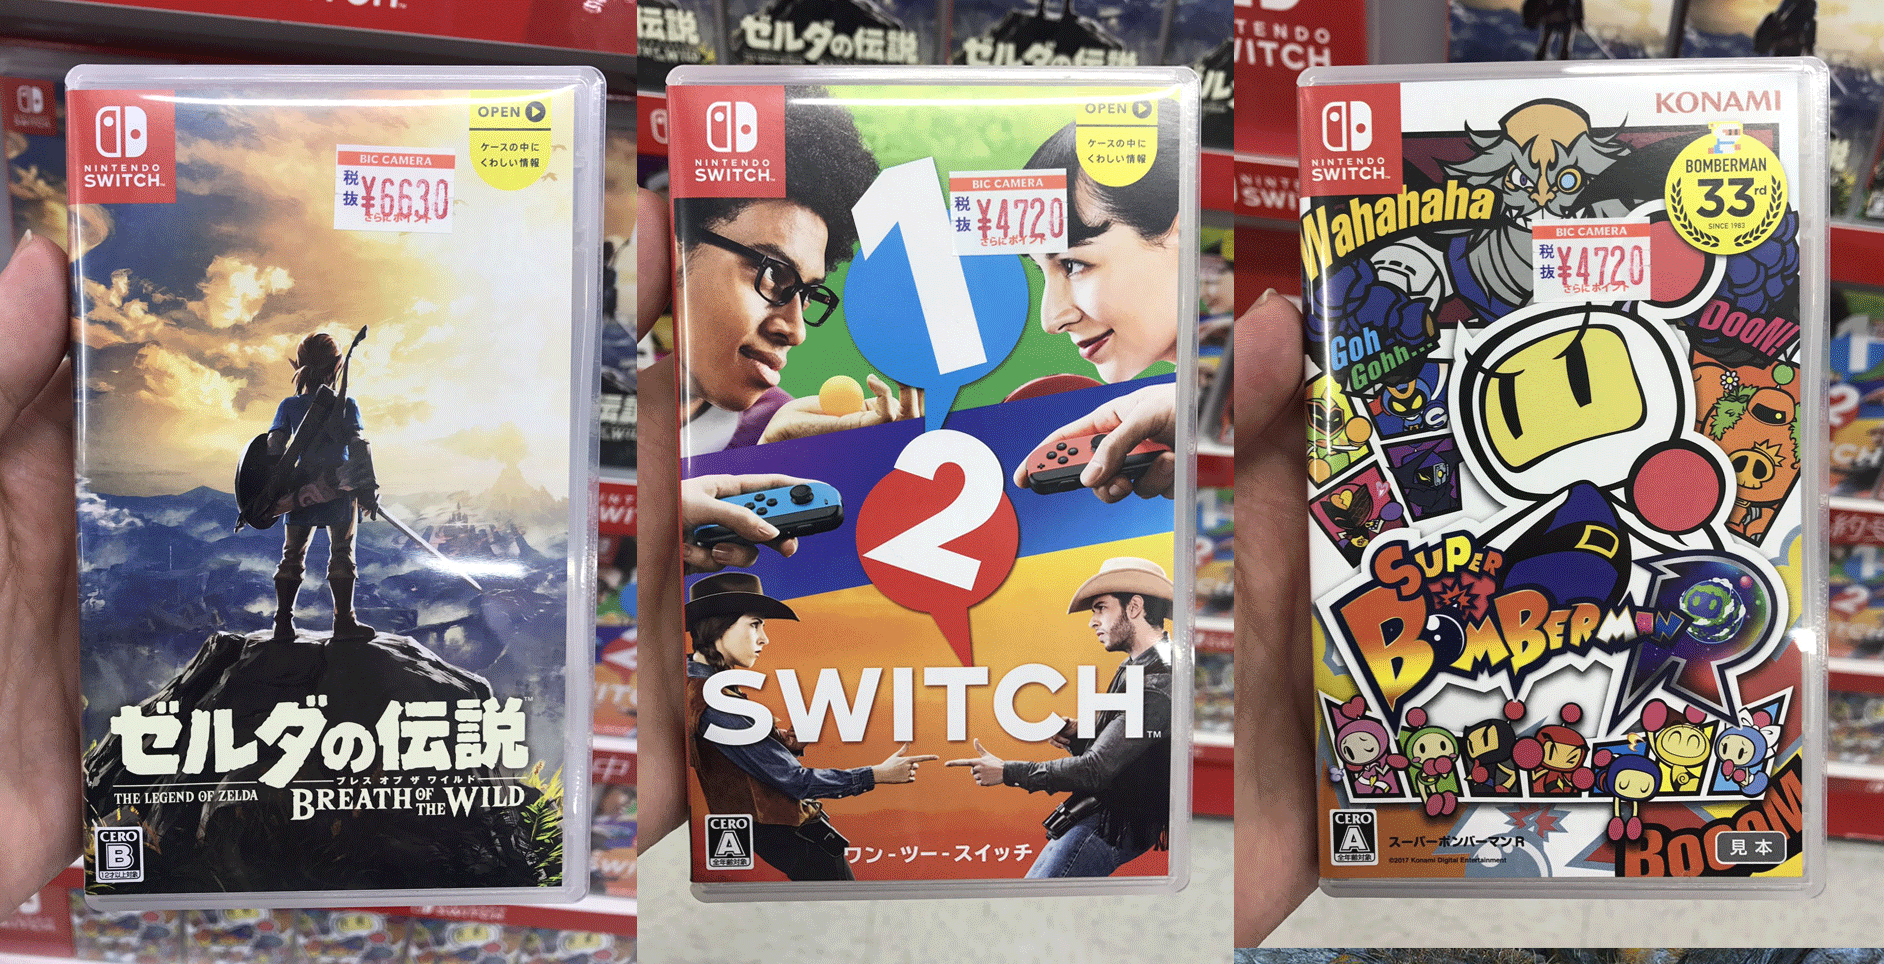 Hollow nintendo switch. Nintendo Switch Box Art. Обложки игр Nintendo Switch. Nintendo Switch диски. Обложка SKYDRIFT Nintendo Switch.